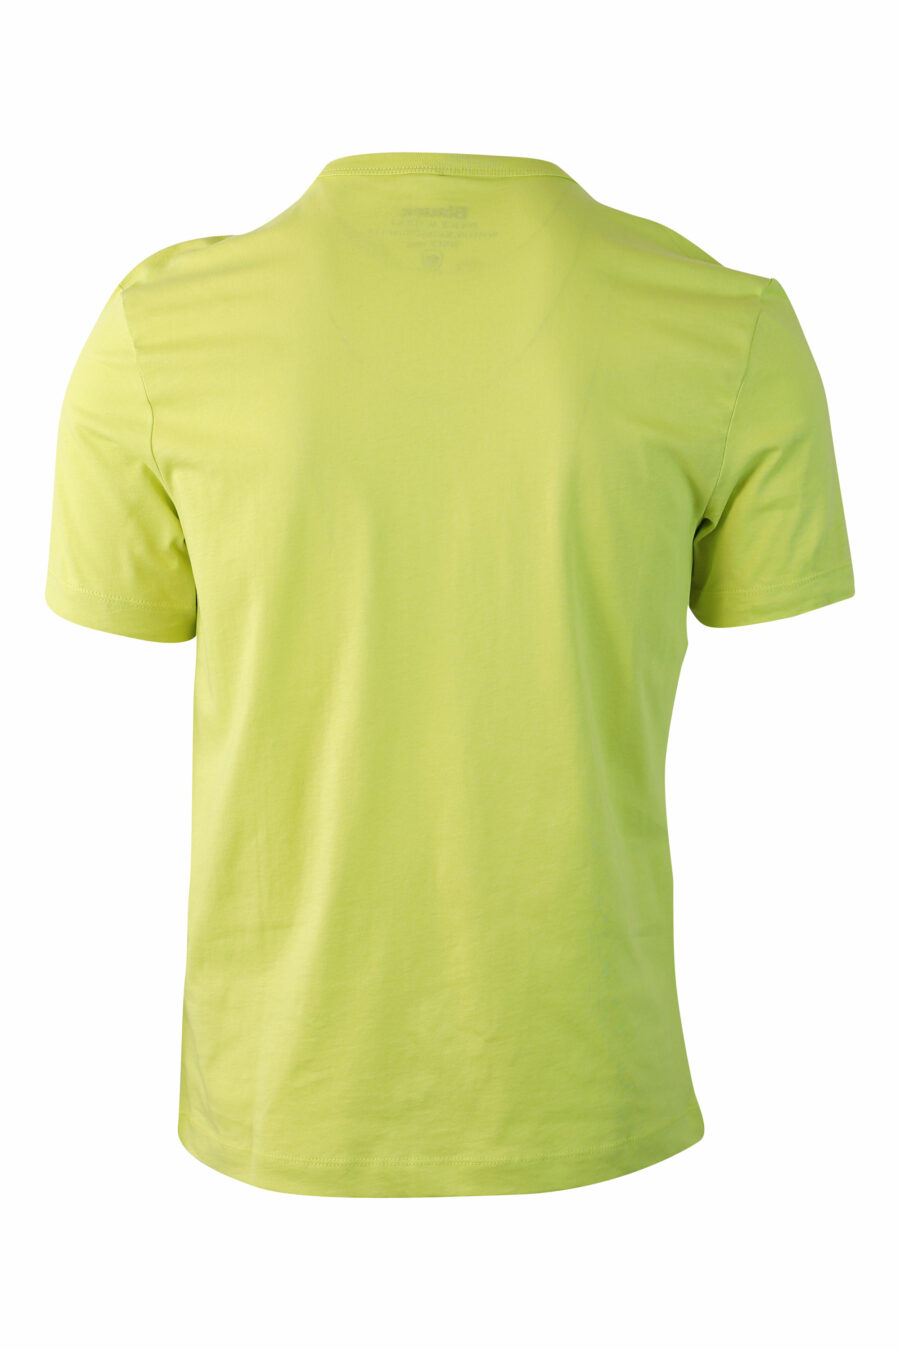 Camiseta verde lima con minilogo escudo - IMG 0069 1